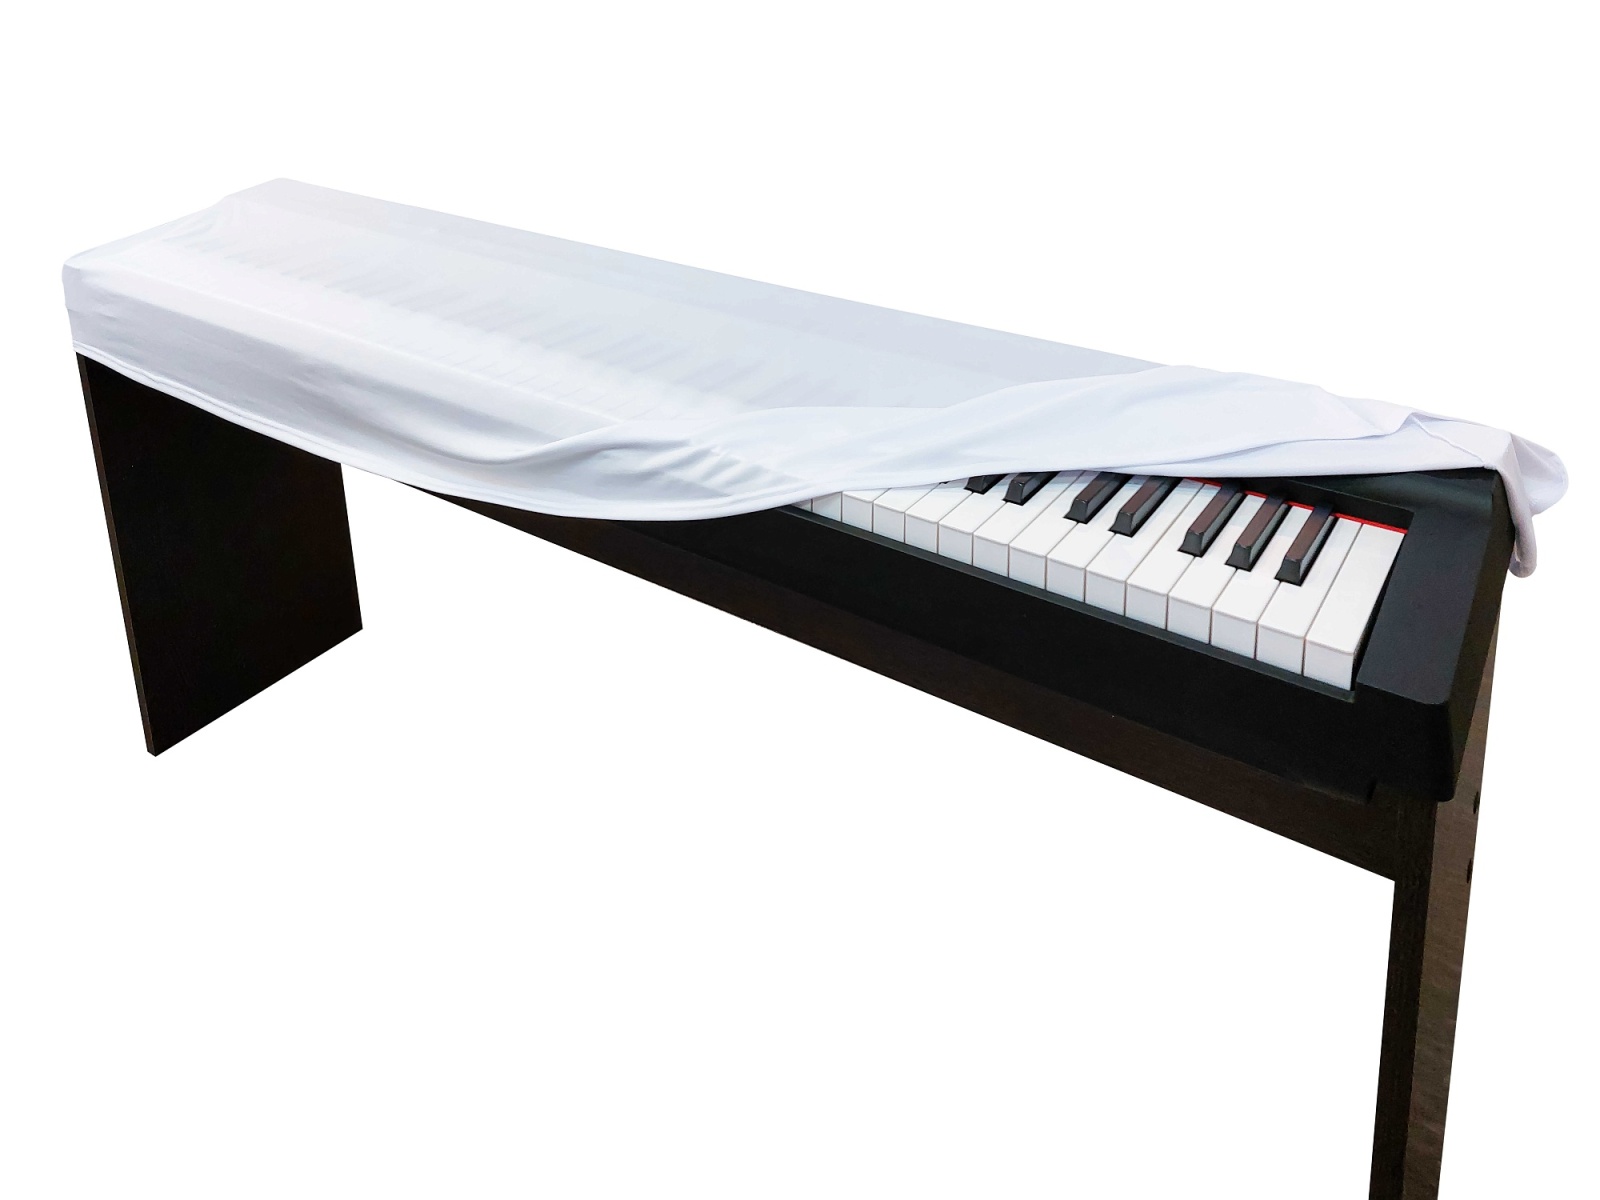 Aka-013W Накидка для цифрового пианино универсальная, белая, Lutner